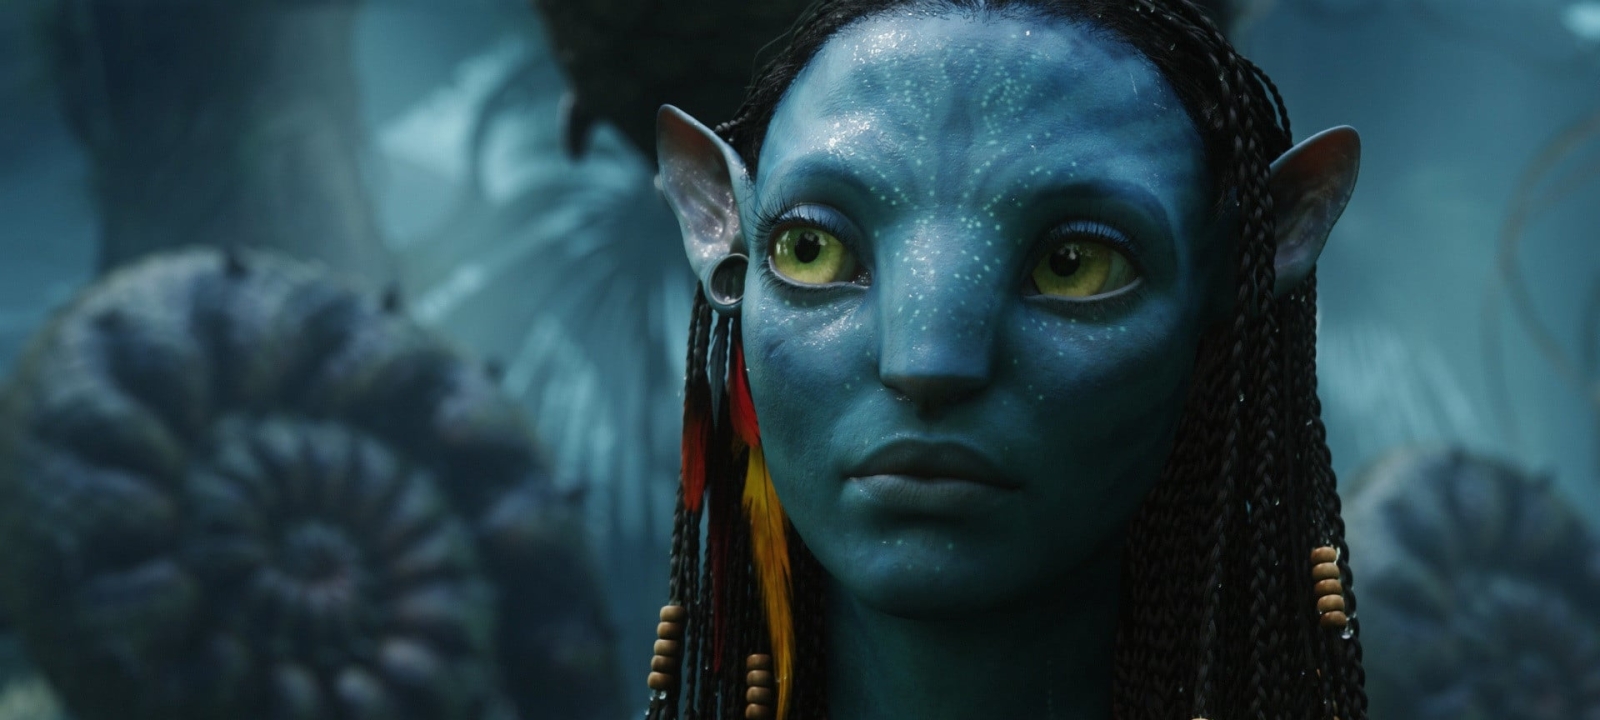 1600x720 Resolution Zoe Saldana as Neytiri in Avatar 1600x720 ...